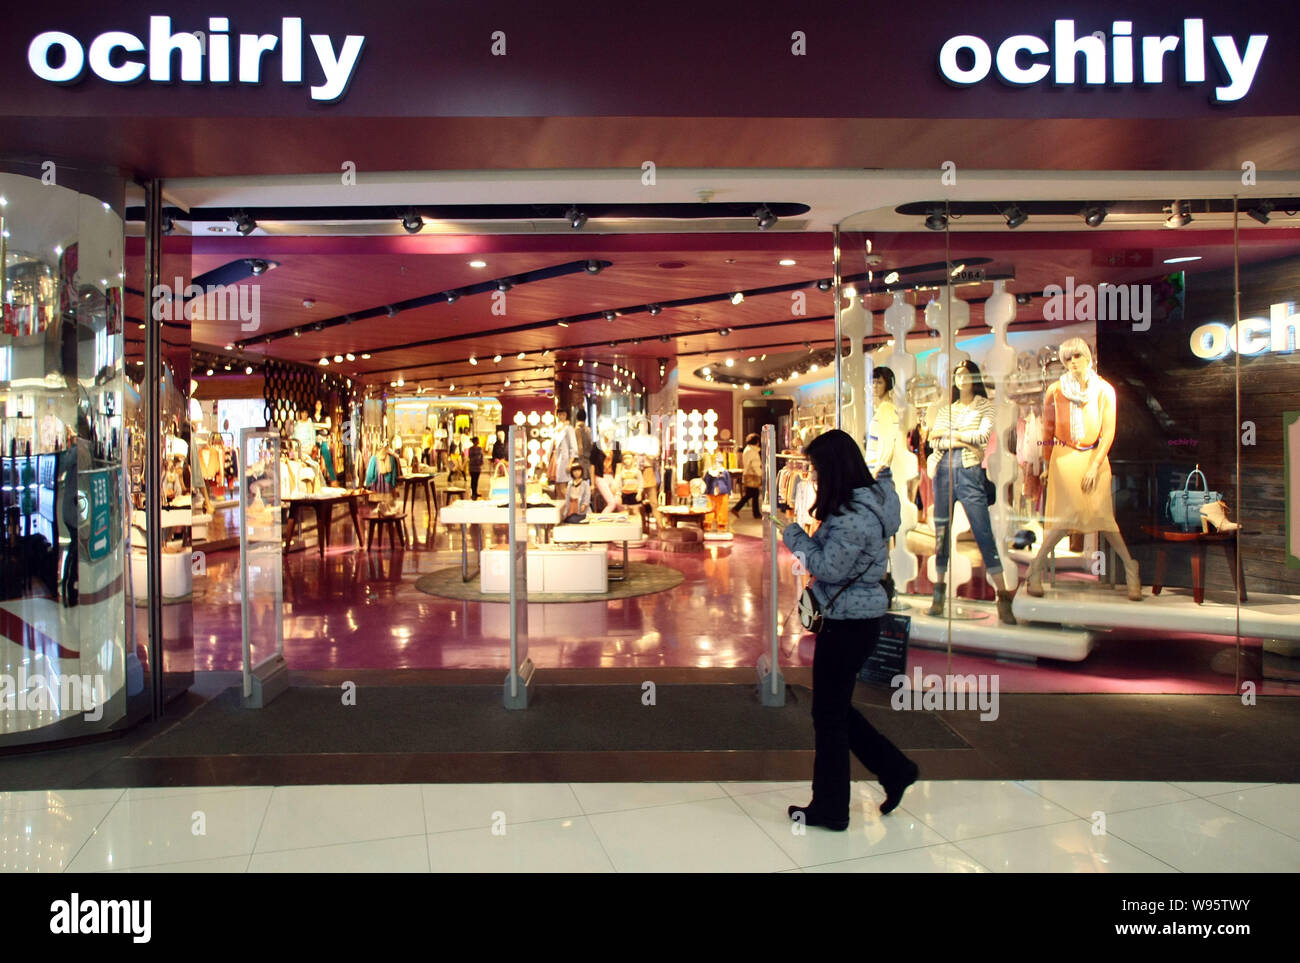 A pedestrian walks past an Ochirly store in Shanghai, China, 13